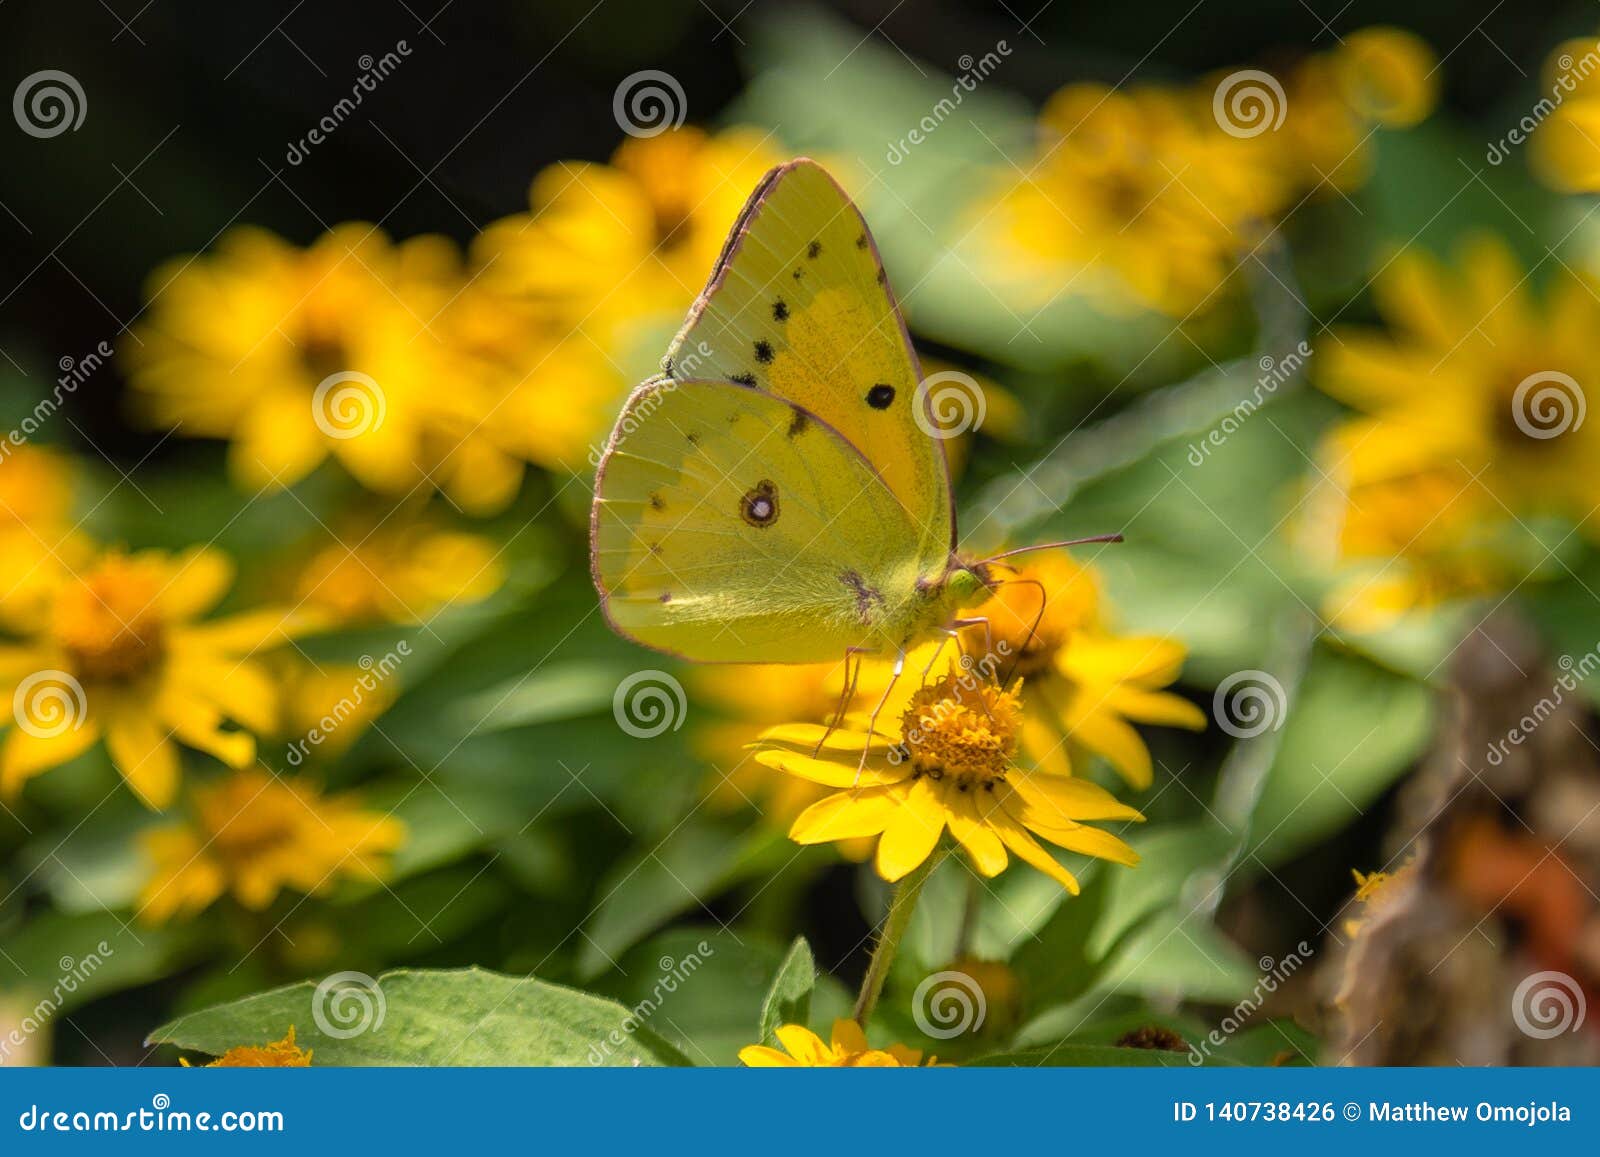 cloudless sulphur butterfly feeding on yellow flower